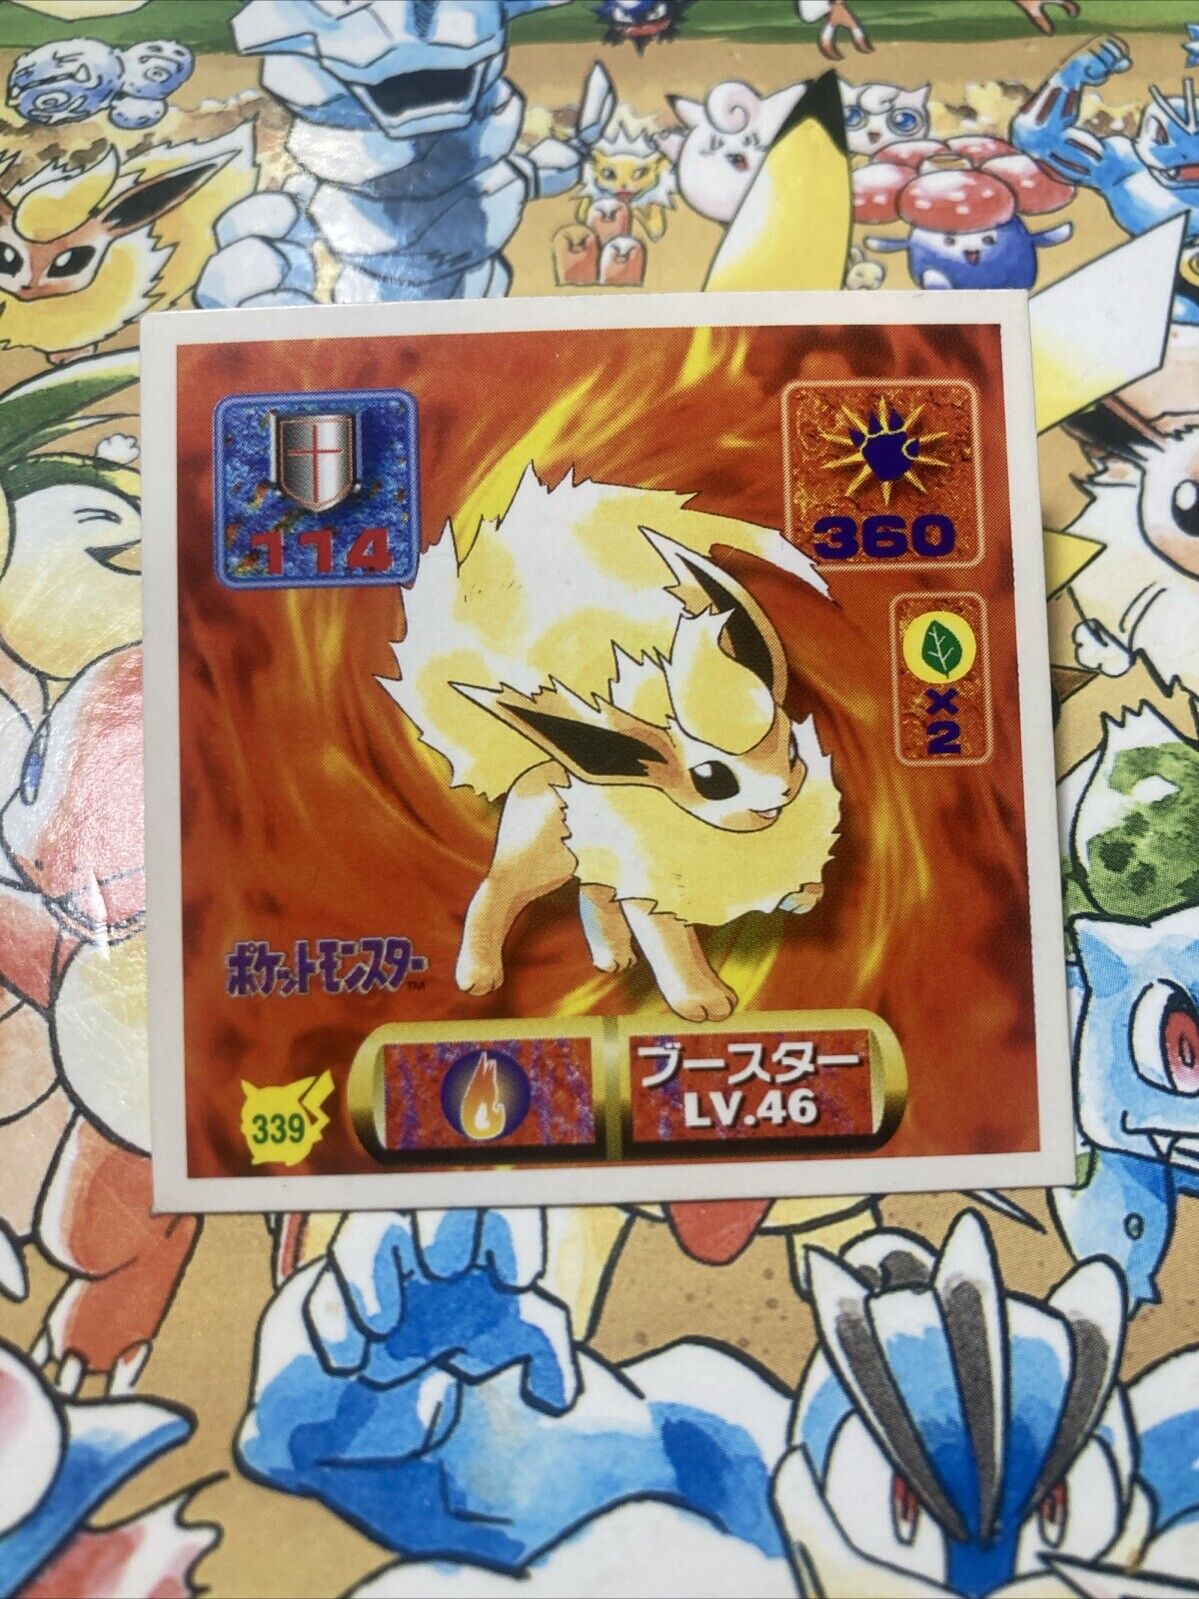 1997 Pokemon Pocket Monsters Amada Sticker Japanese Flareon #339 US Seller